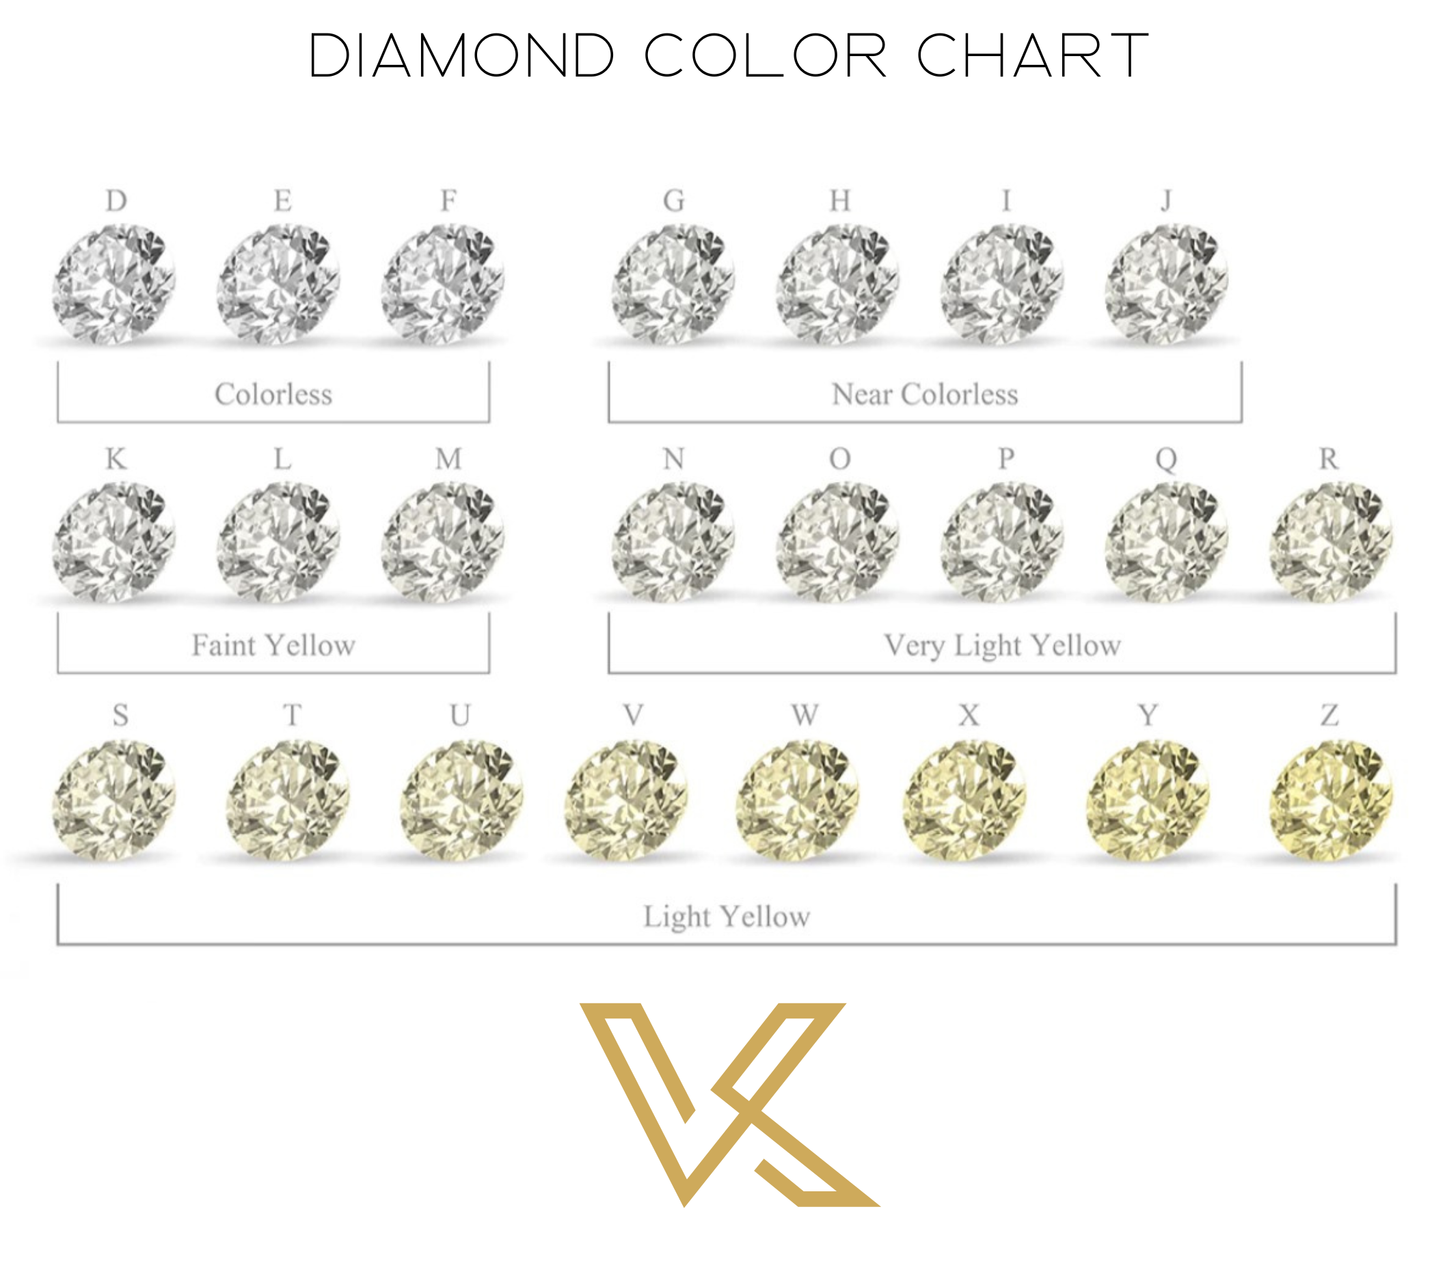 Luxury Diamond Engagement Rings. 3.00 Carat Fancy Yellow Diamond.